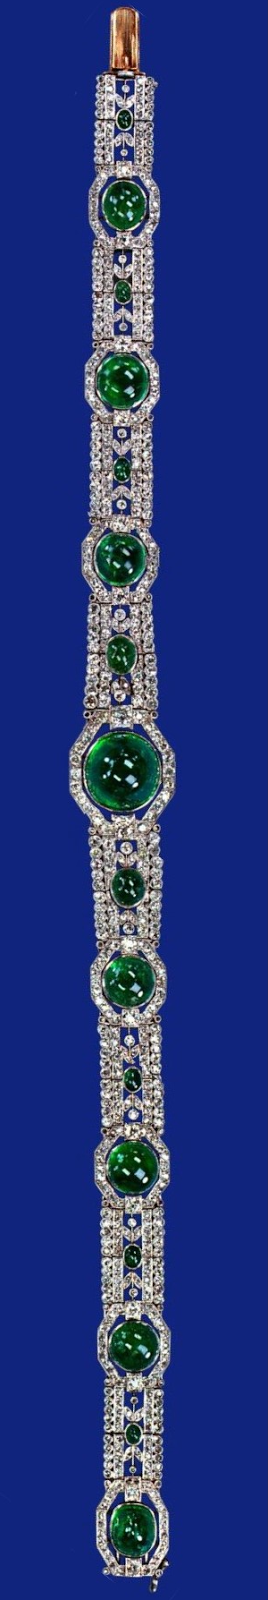 Gods and Foolish Grandeur: Green like Spring - random emerald jewelry